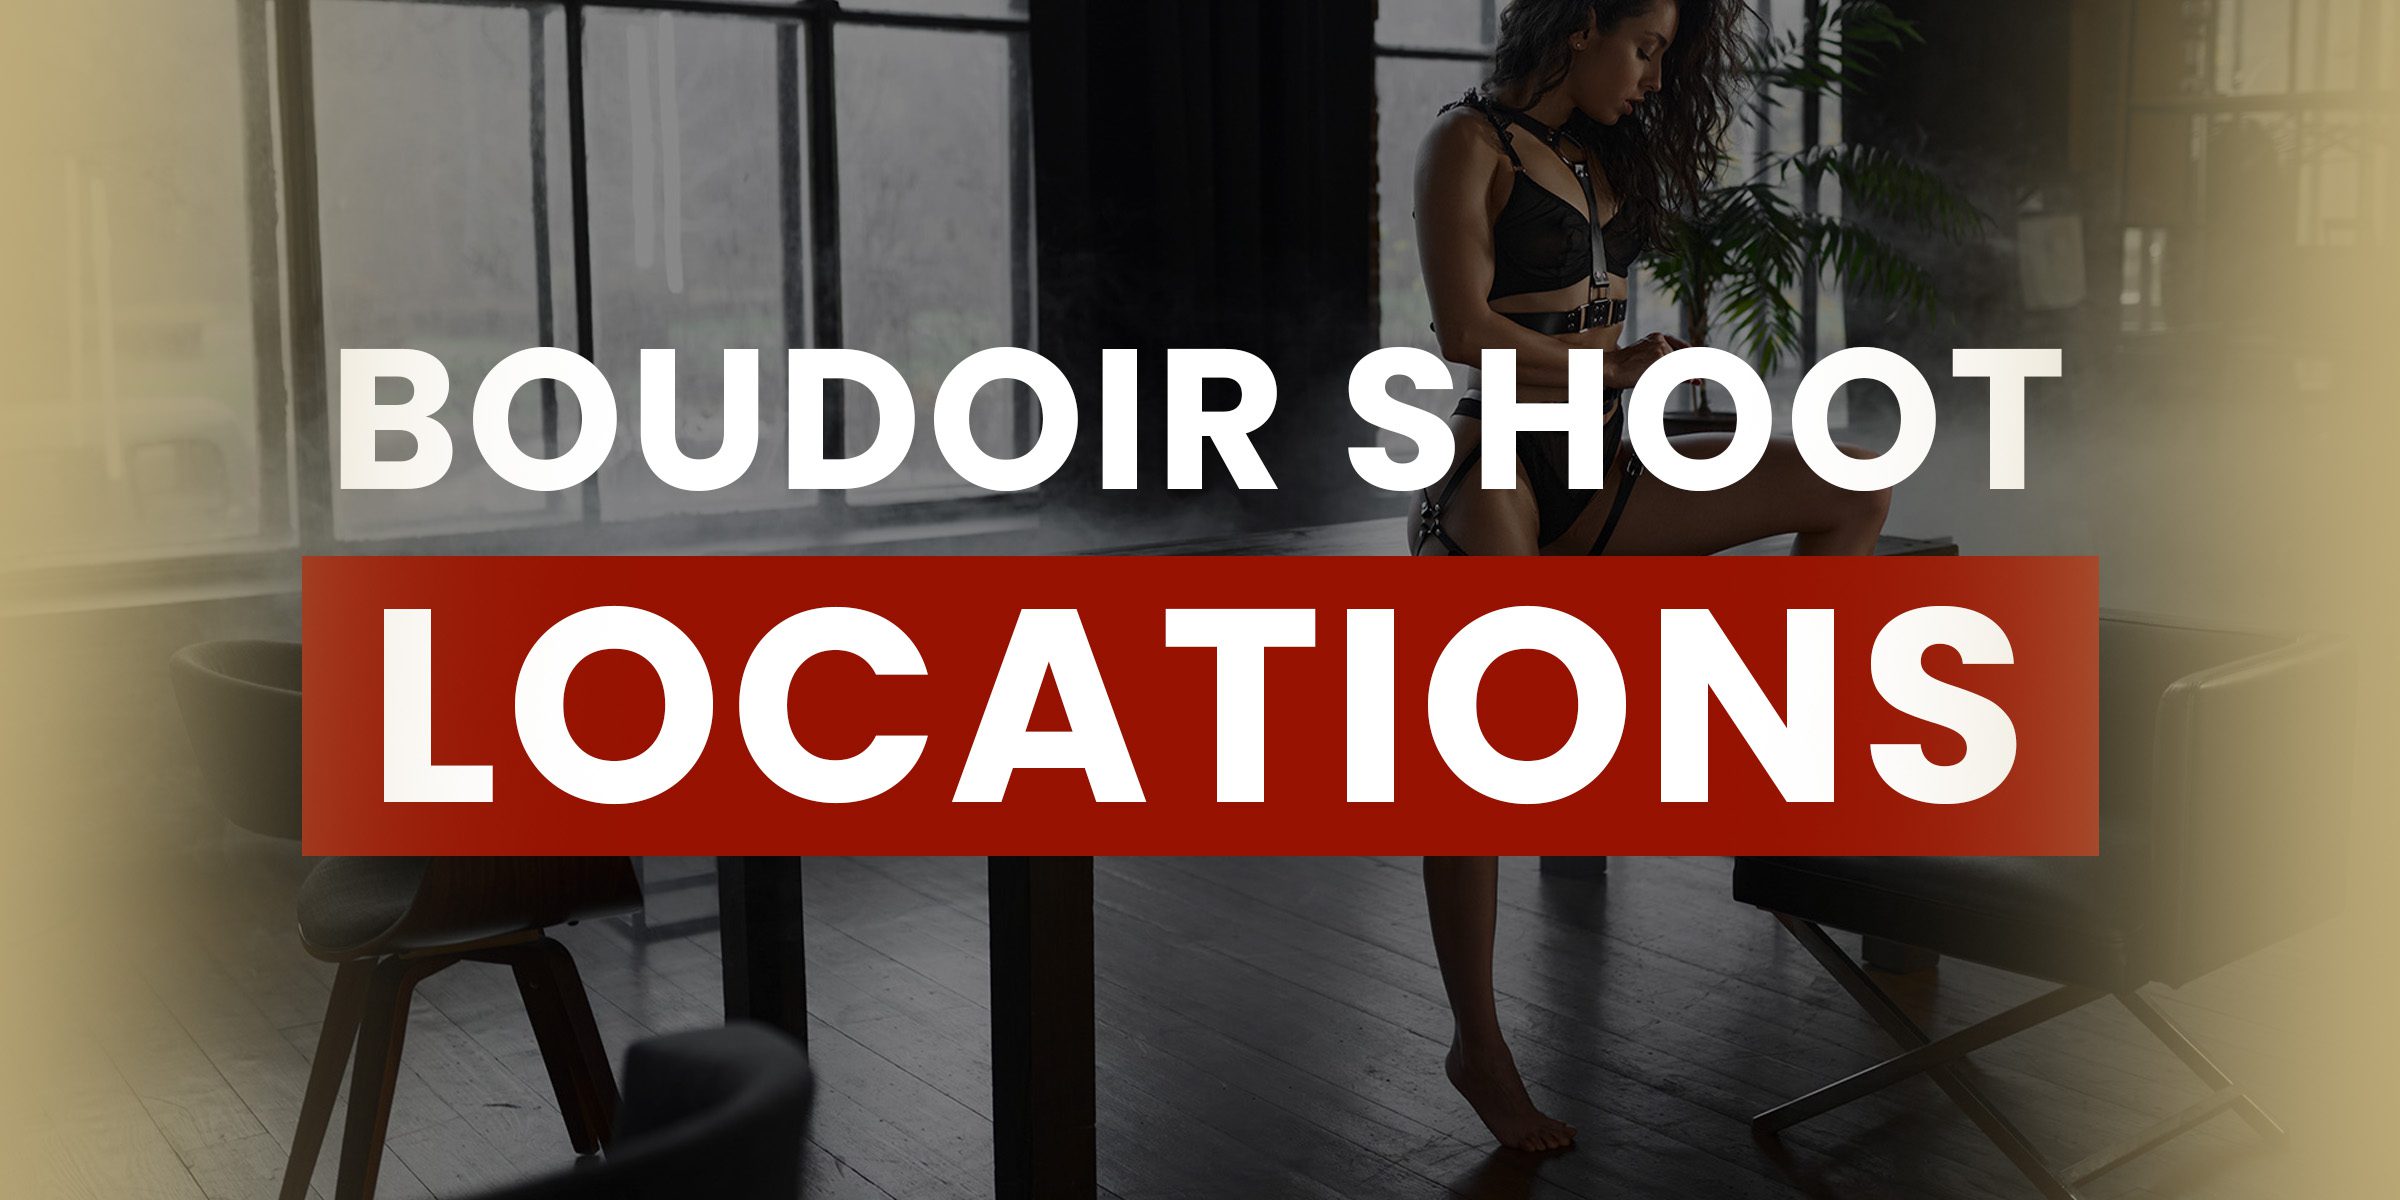 boudoir photoshoot location ideas, boudoir blog